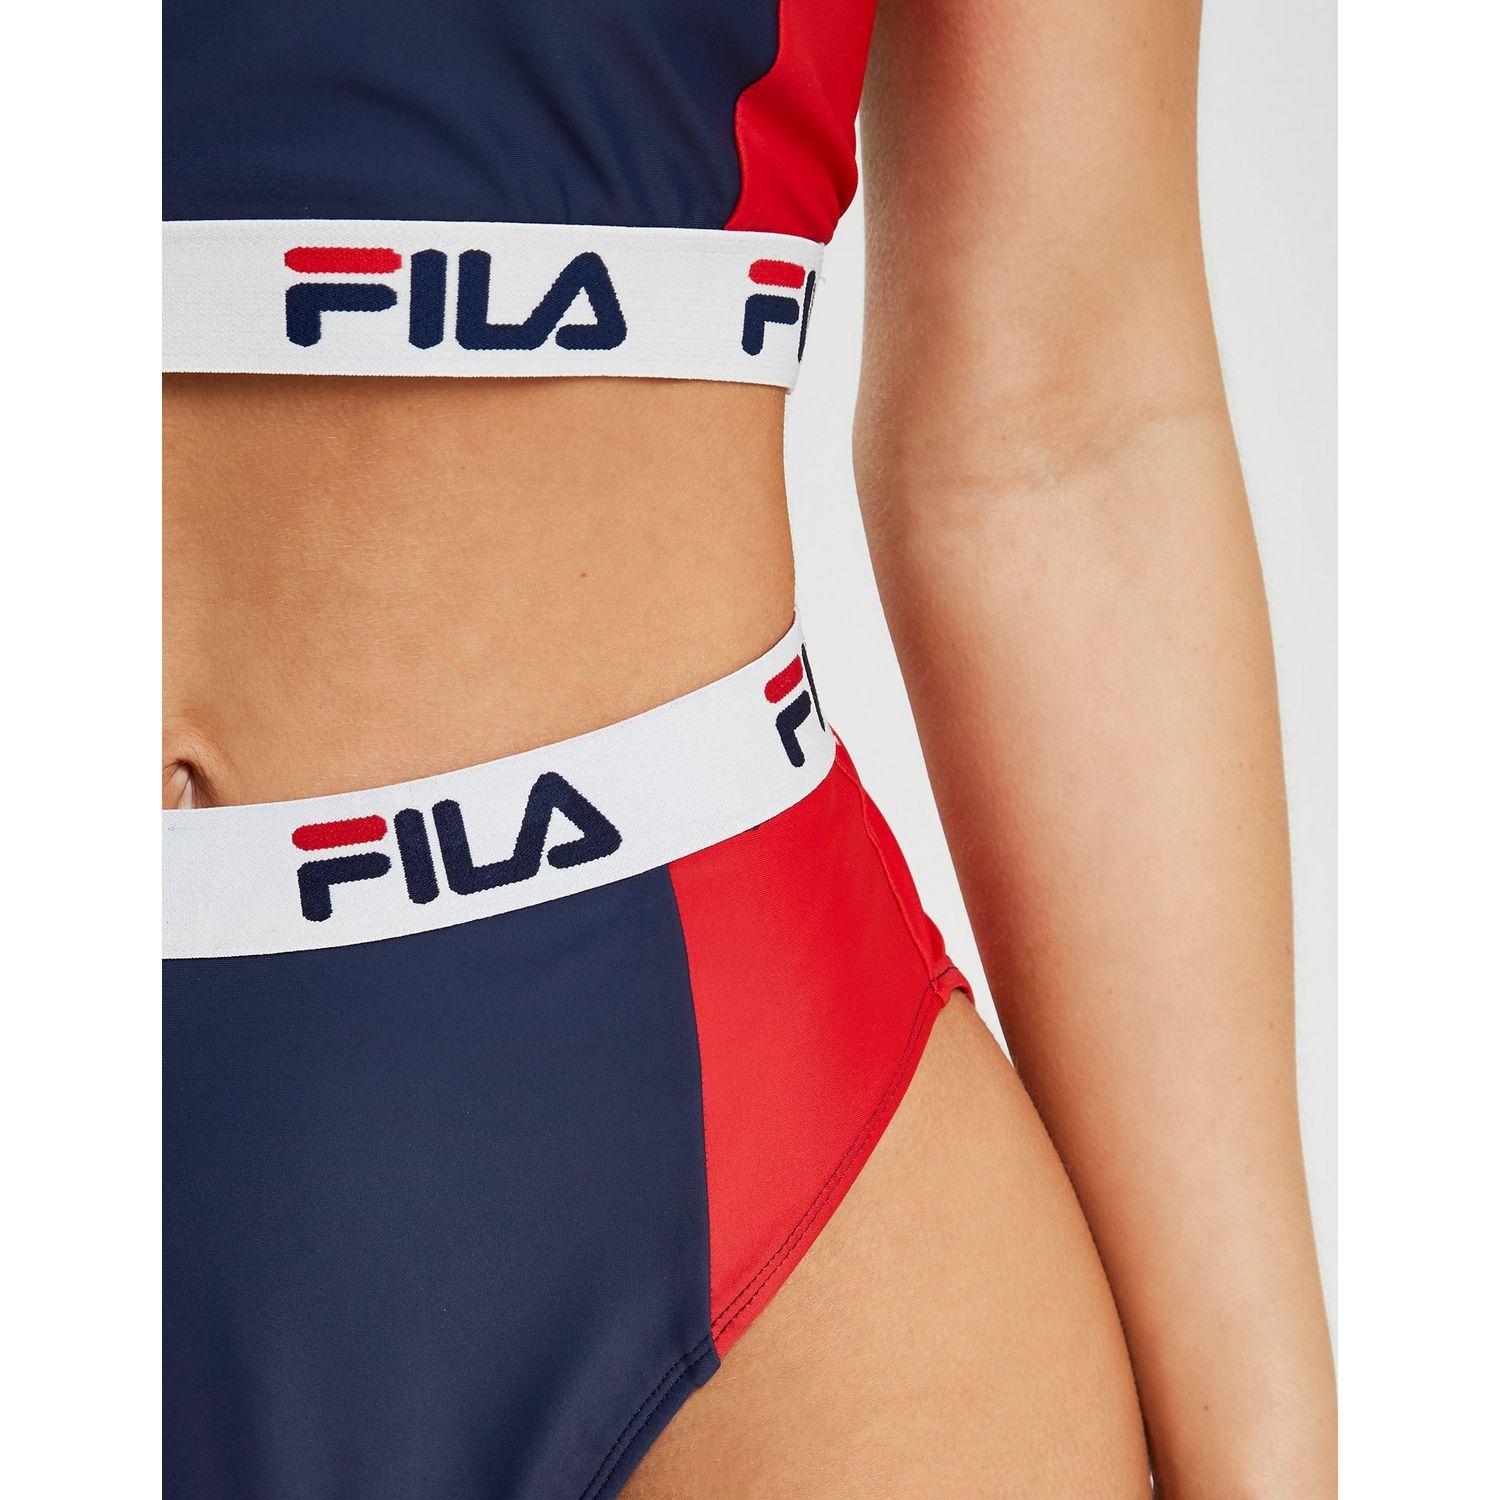 Fila Synthetic Colour Block High Waist Bikini Bottoms in Navy/Red (Blue) -  Lyst